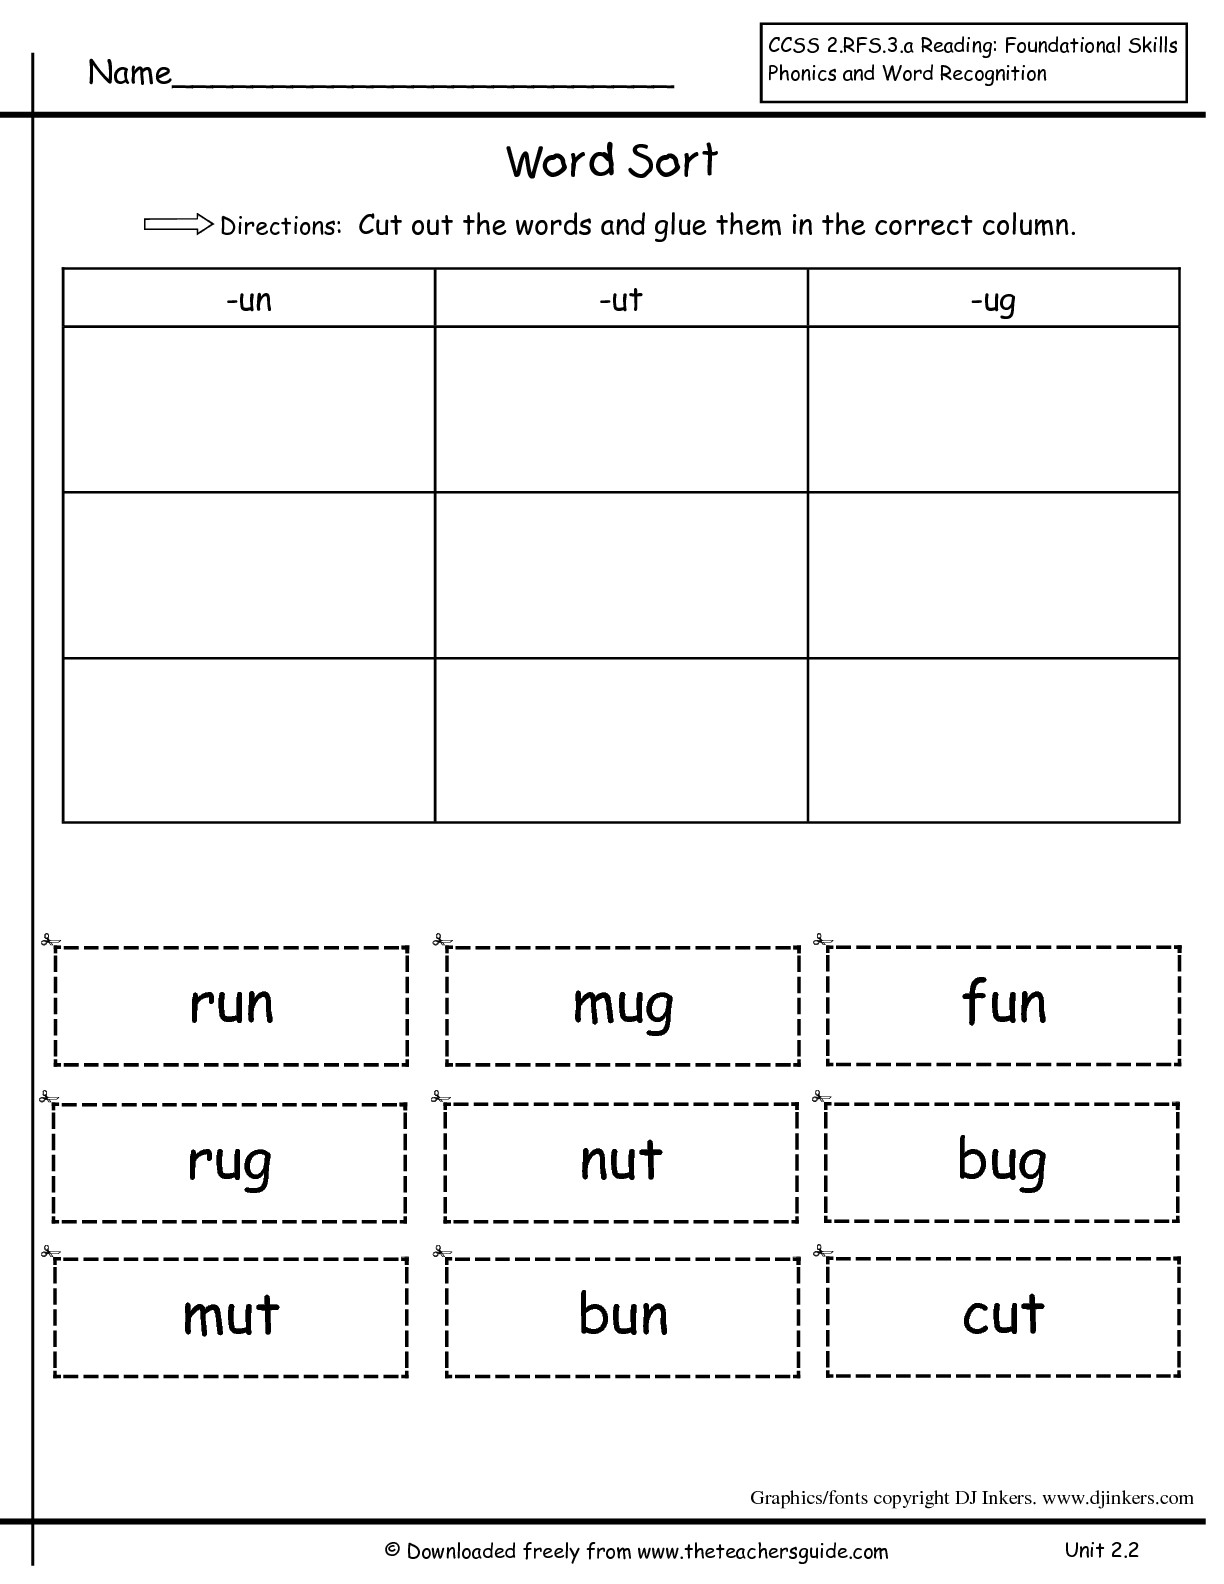 First Grade Spelling Words Worksheets